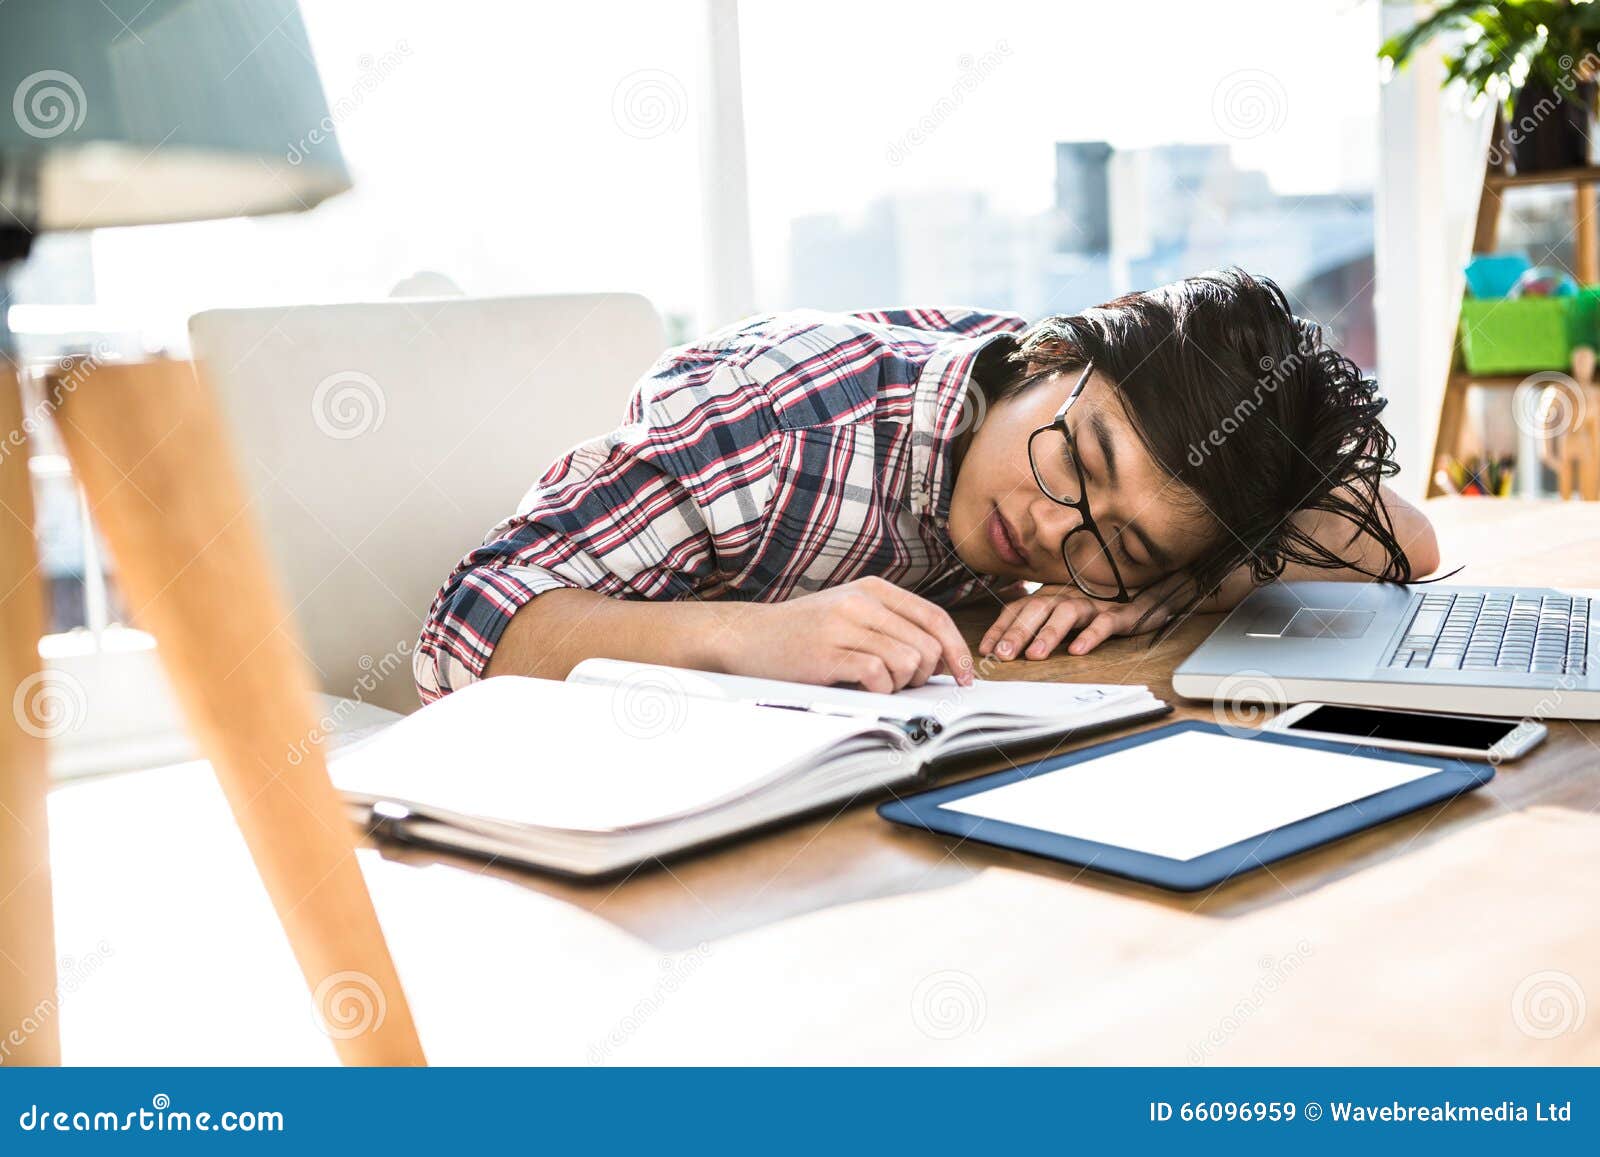 Hipster Businessman Falling Asleep On Desk Stock Image Image Of